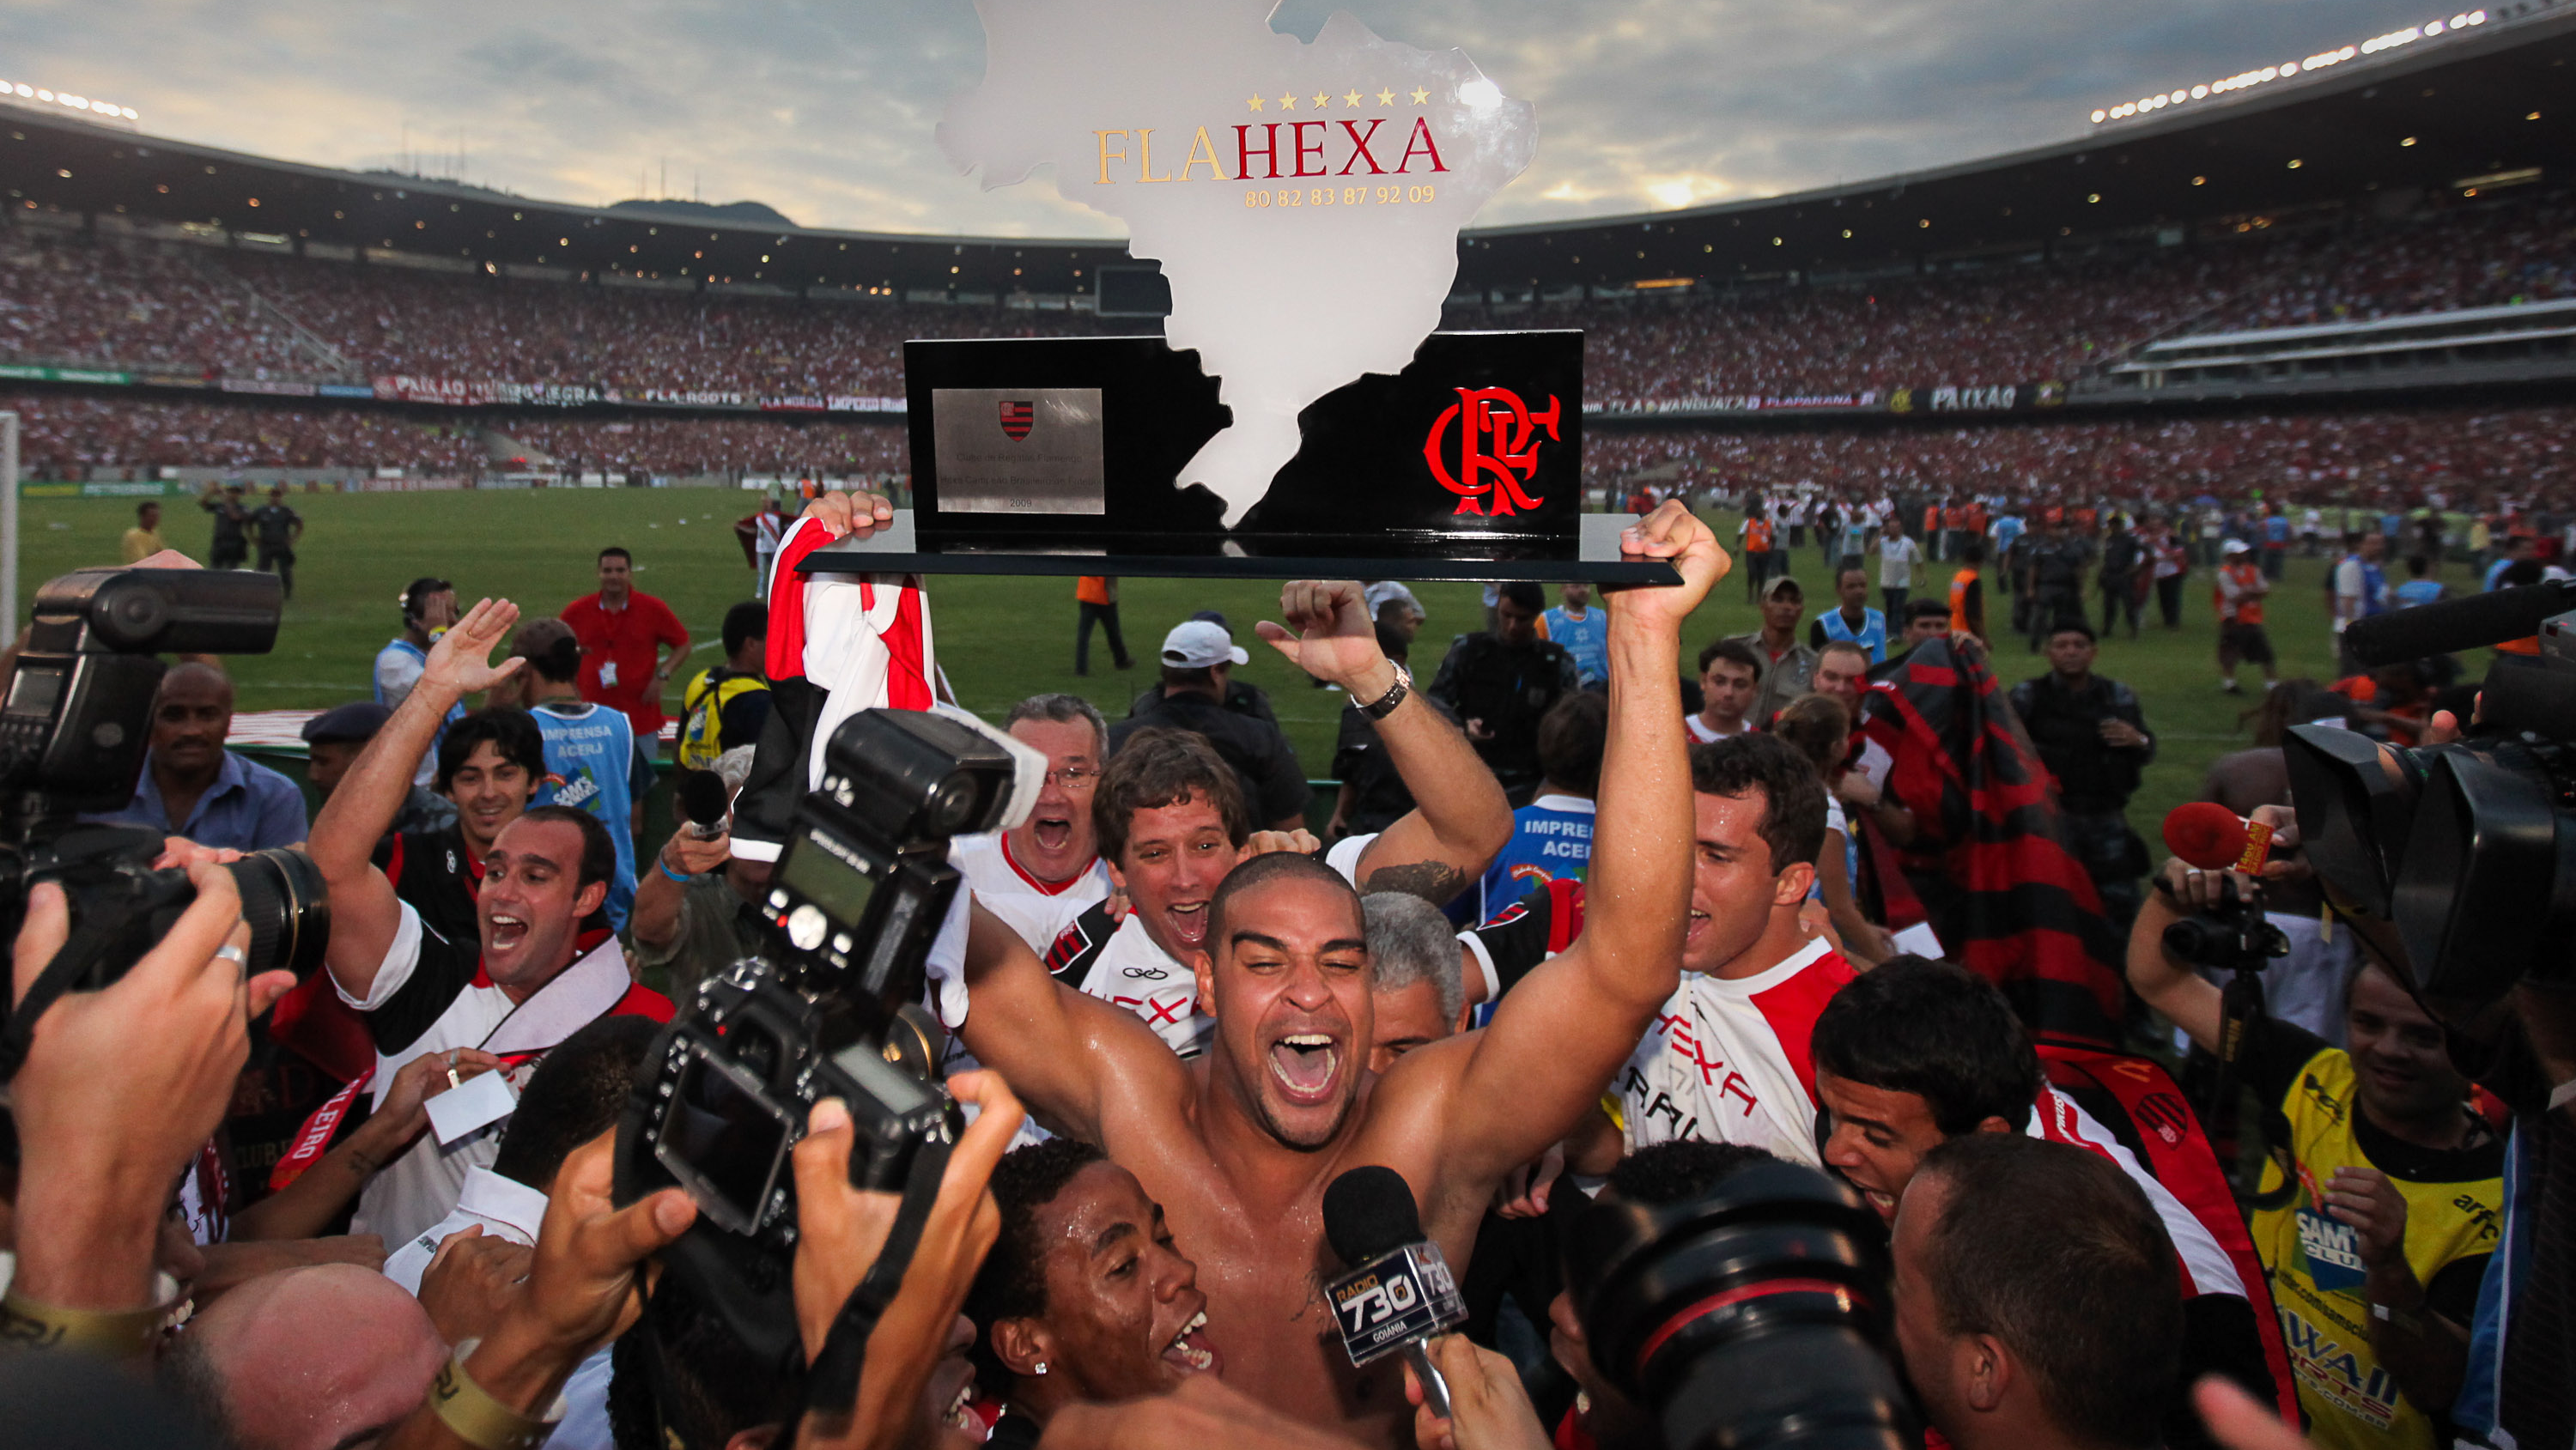 Adriano, Premier League, Flamengo, serie a, milan, West Ham, Roma